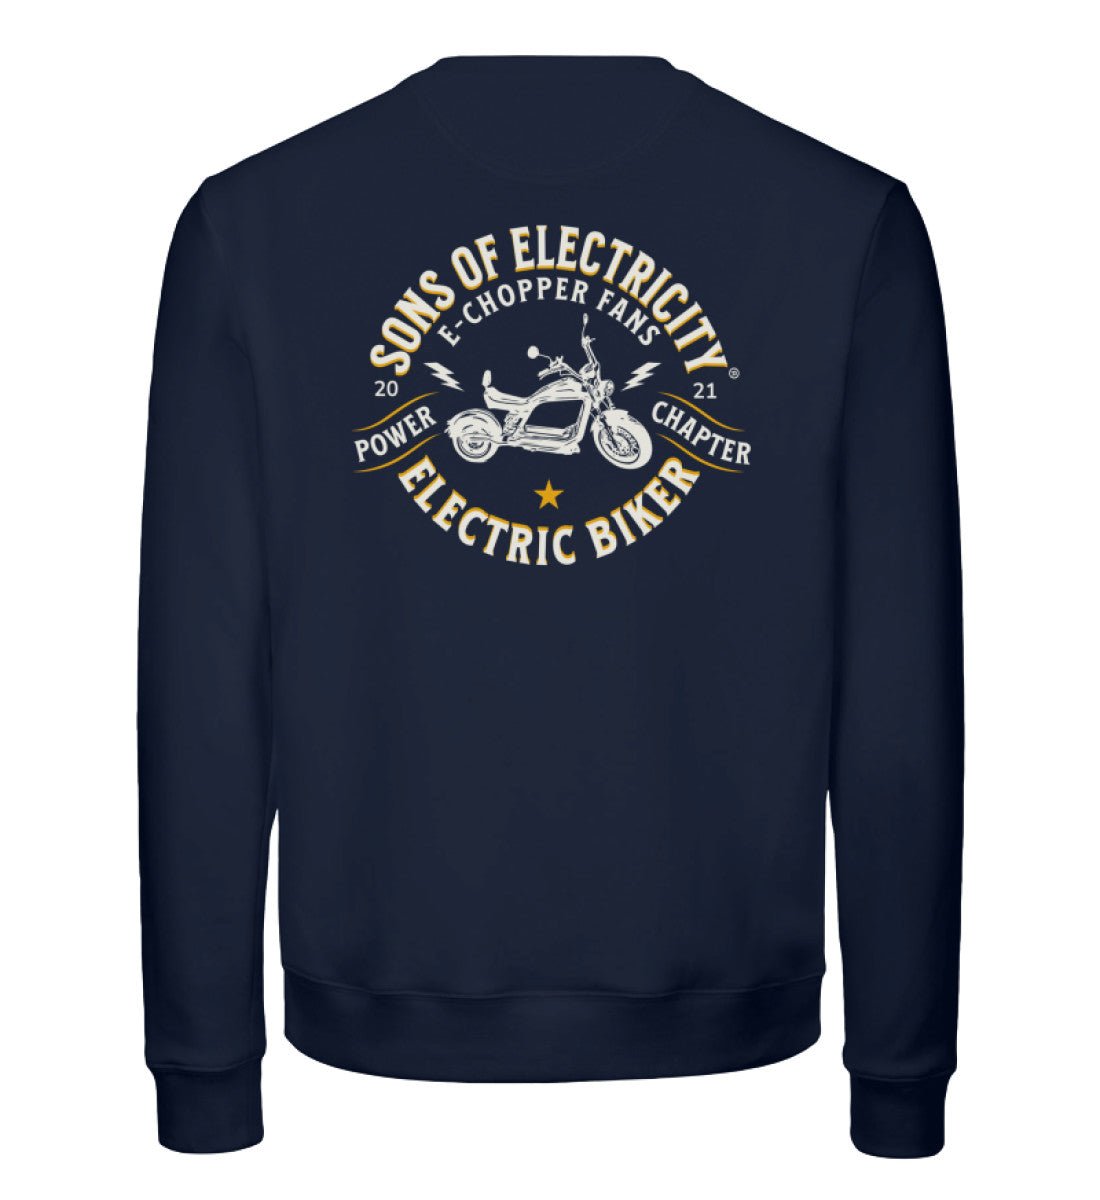 Bio Premium E-Chopper (2) Sweatshirt: SONS OF ELECTRICITY